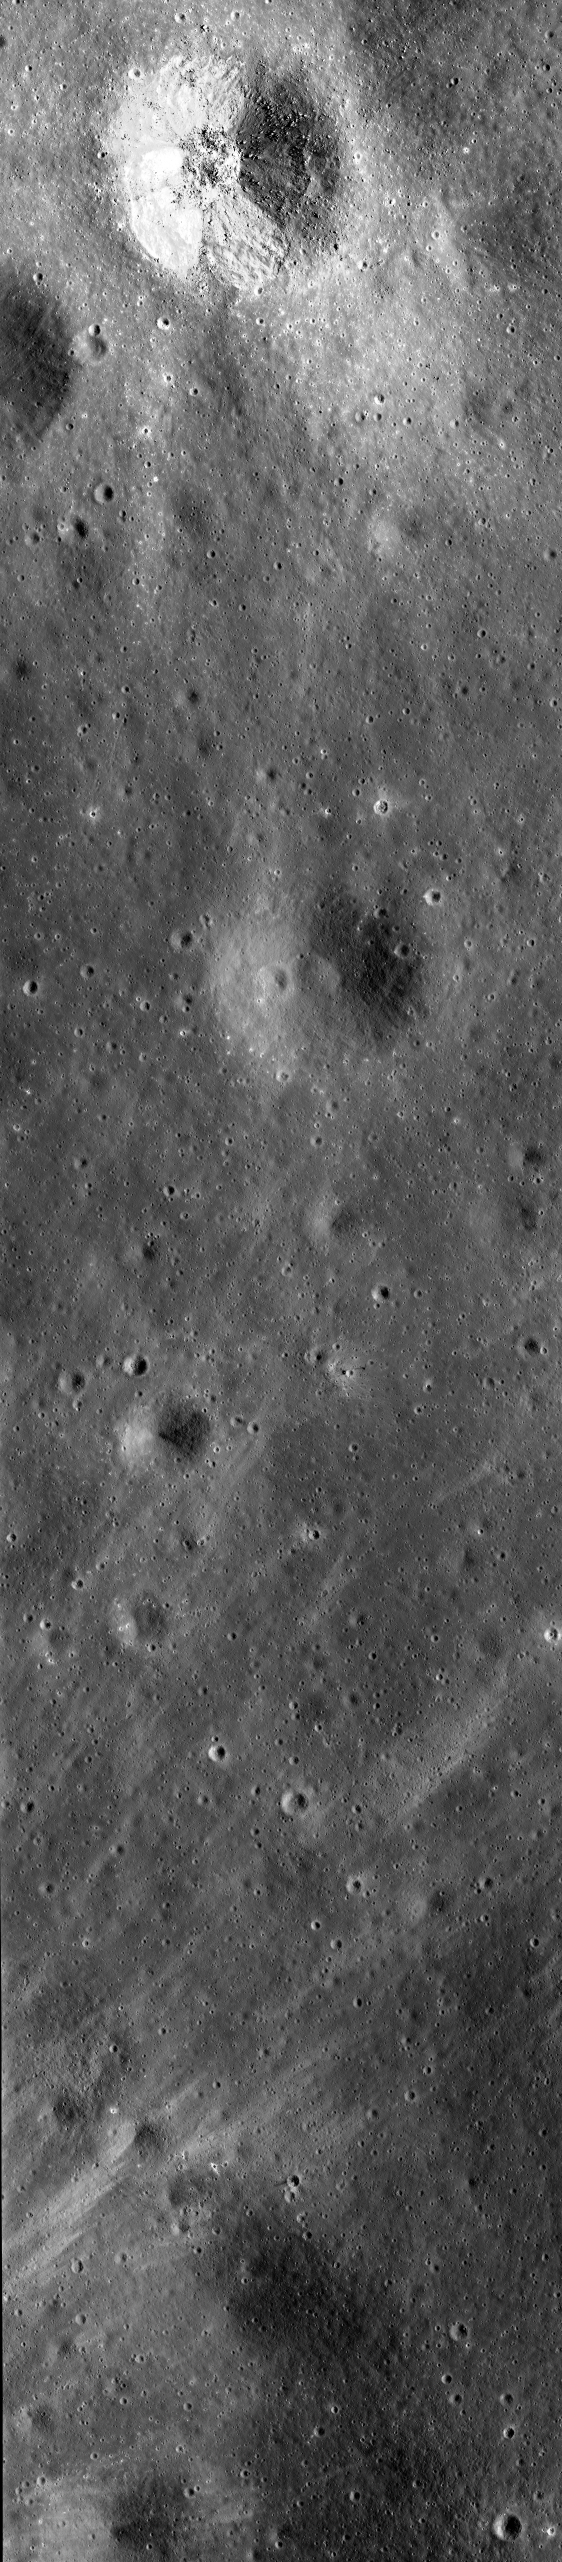 Image of Apollo 16 Landing Site 